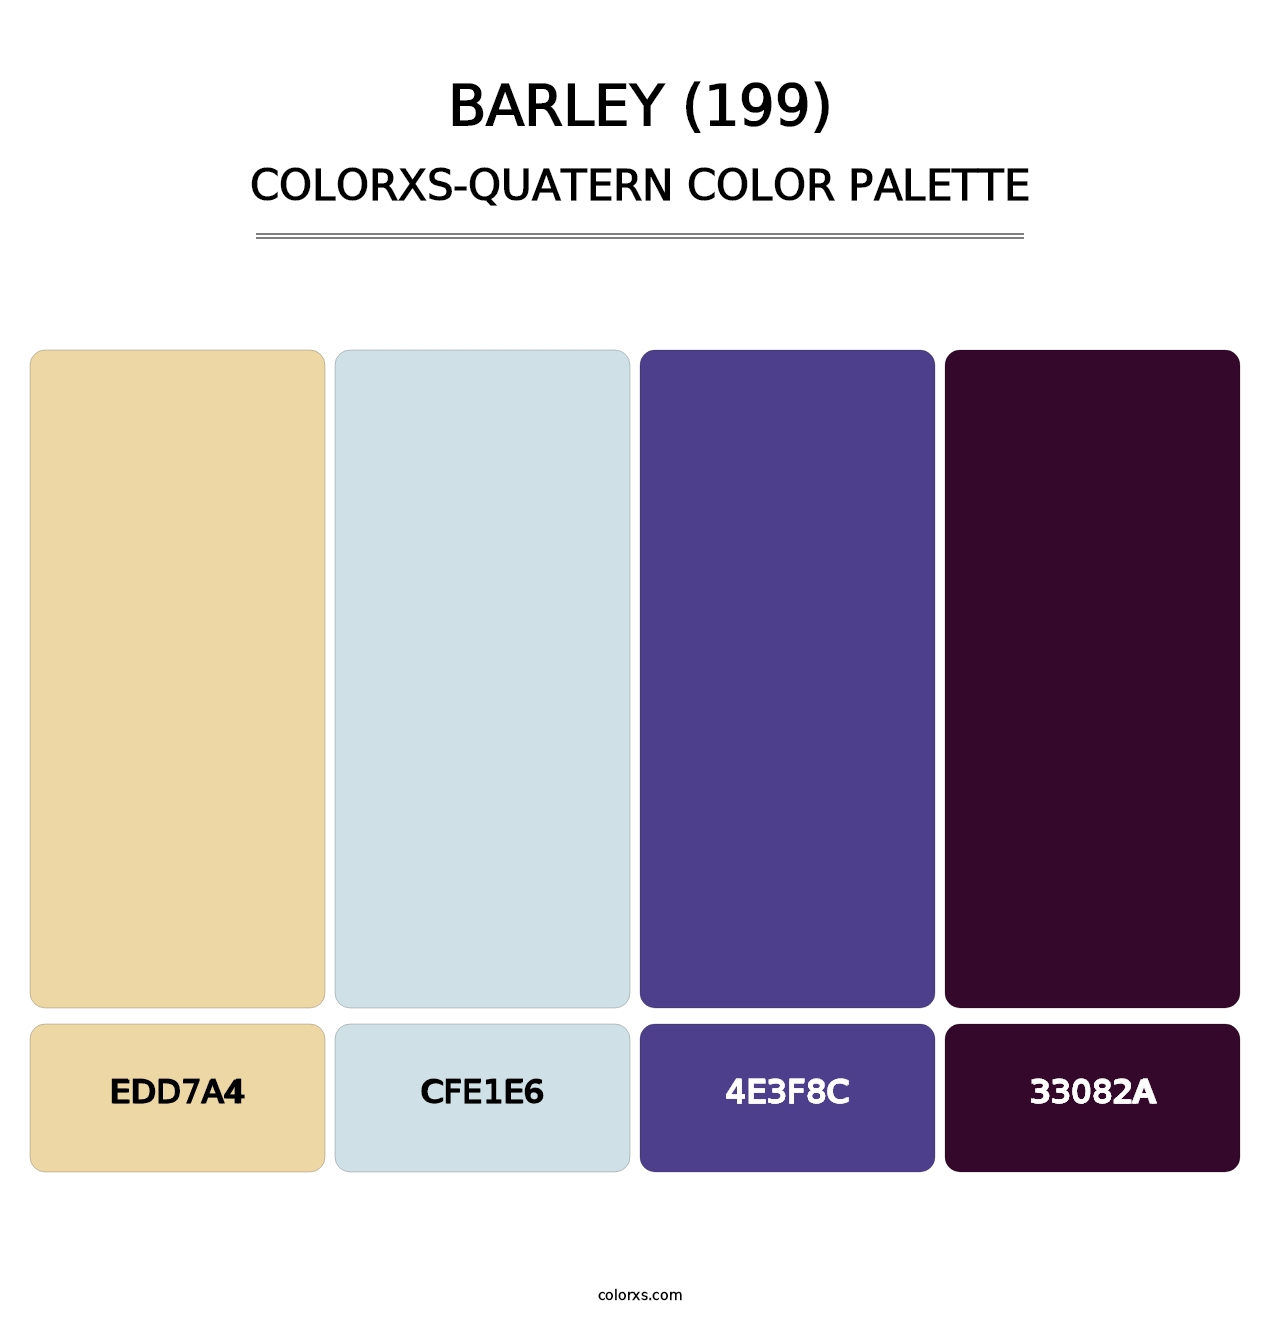 Barley (199) - Colorxs Quatern Palette